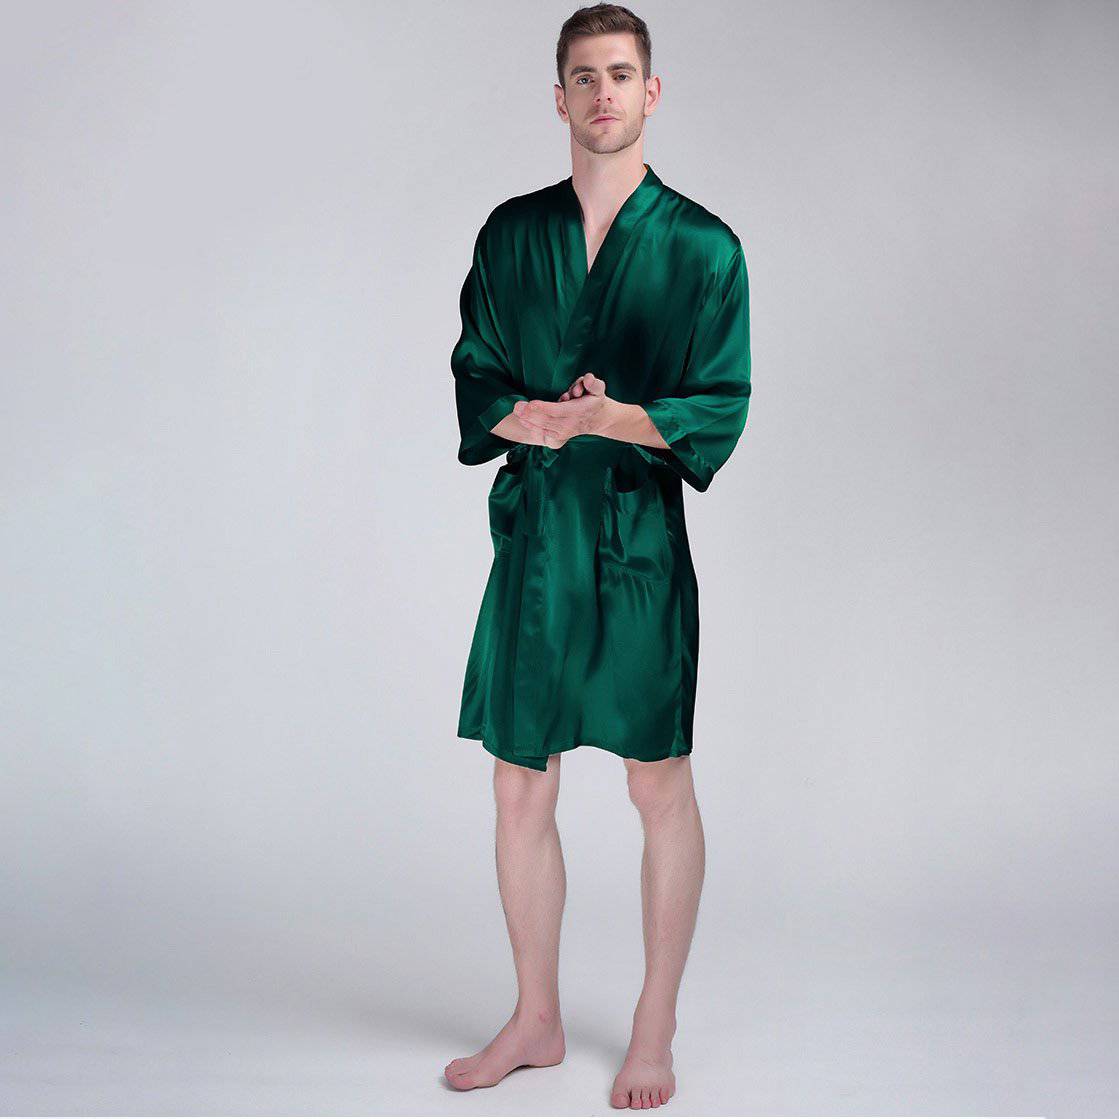 COLD POSH Men's Real Silk Robe Luxury Lightweight Bathrobe for Men